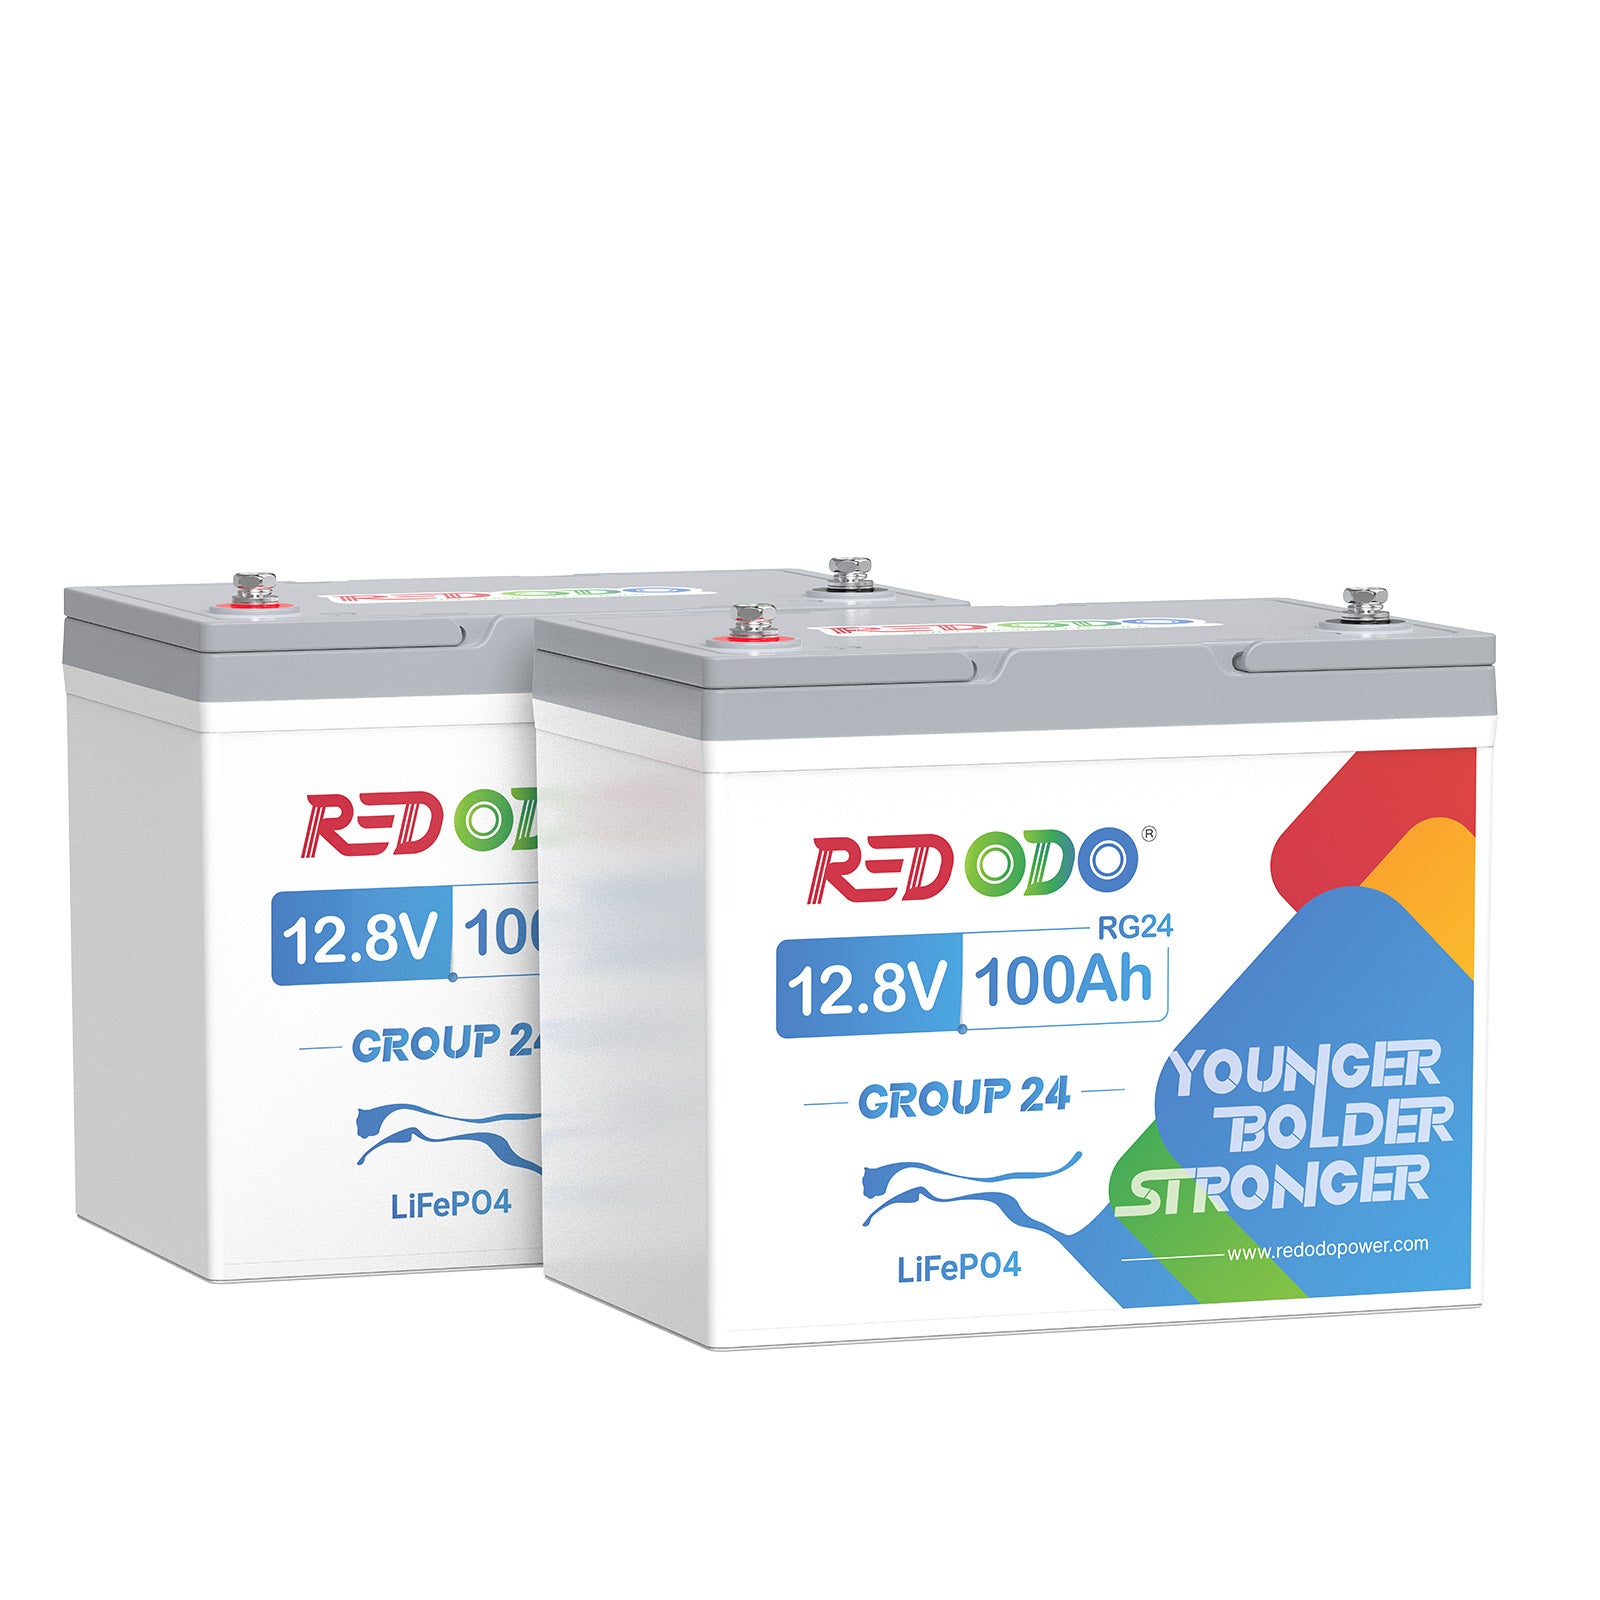 Redodo 12V 100Ah Group24 リン酸鉄リチウムイオンバッテリー （PSE認証済み）